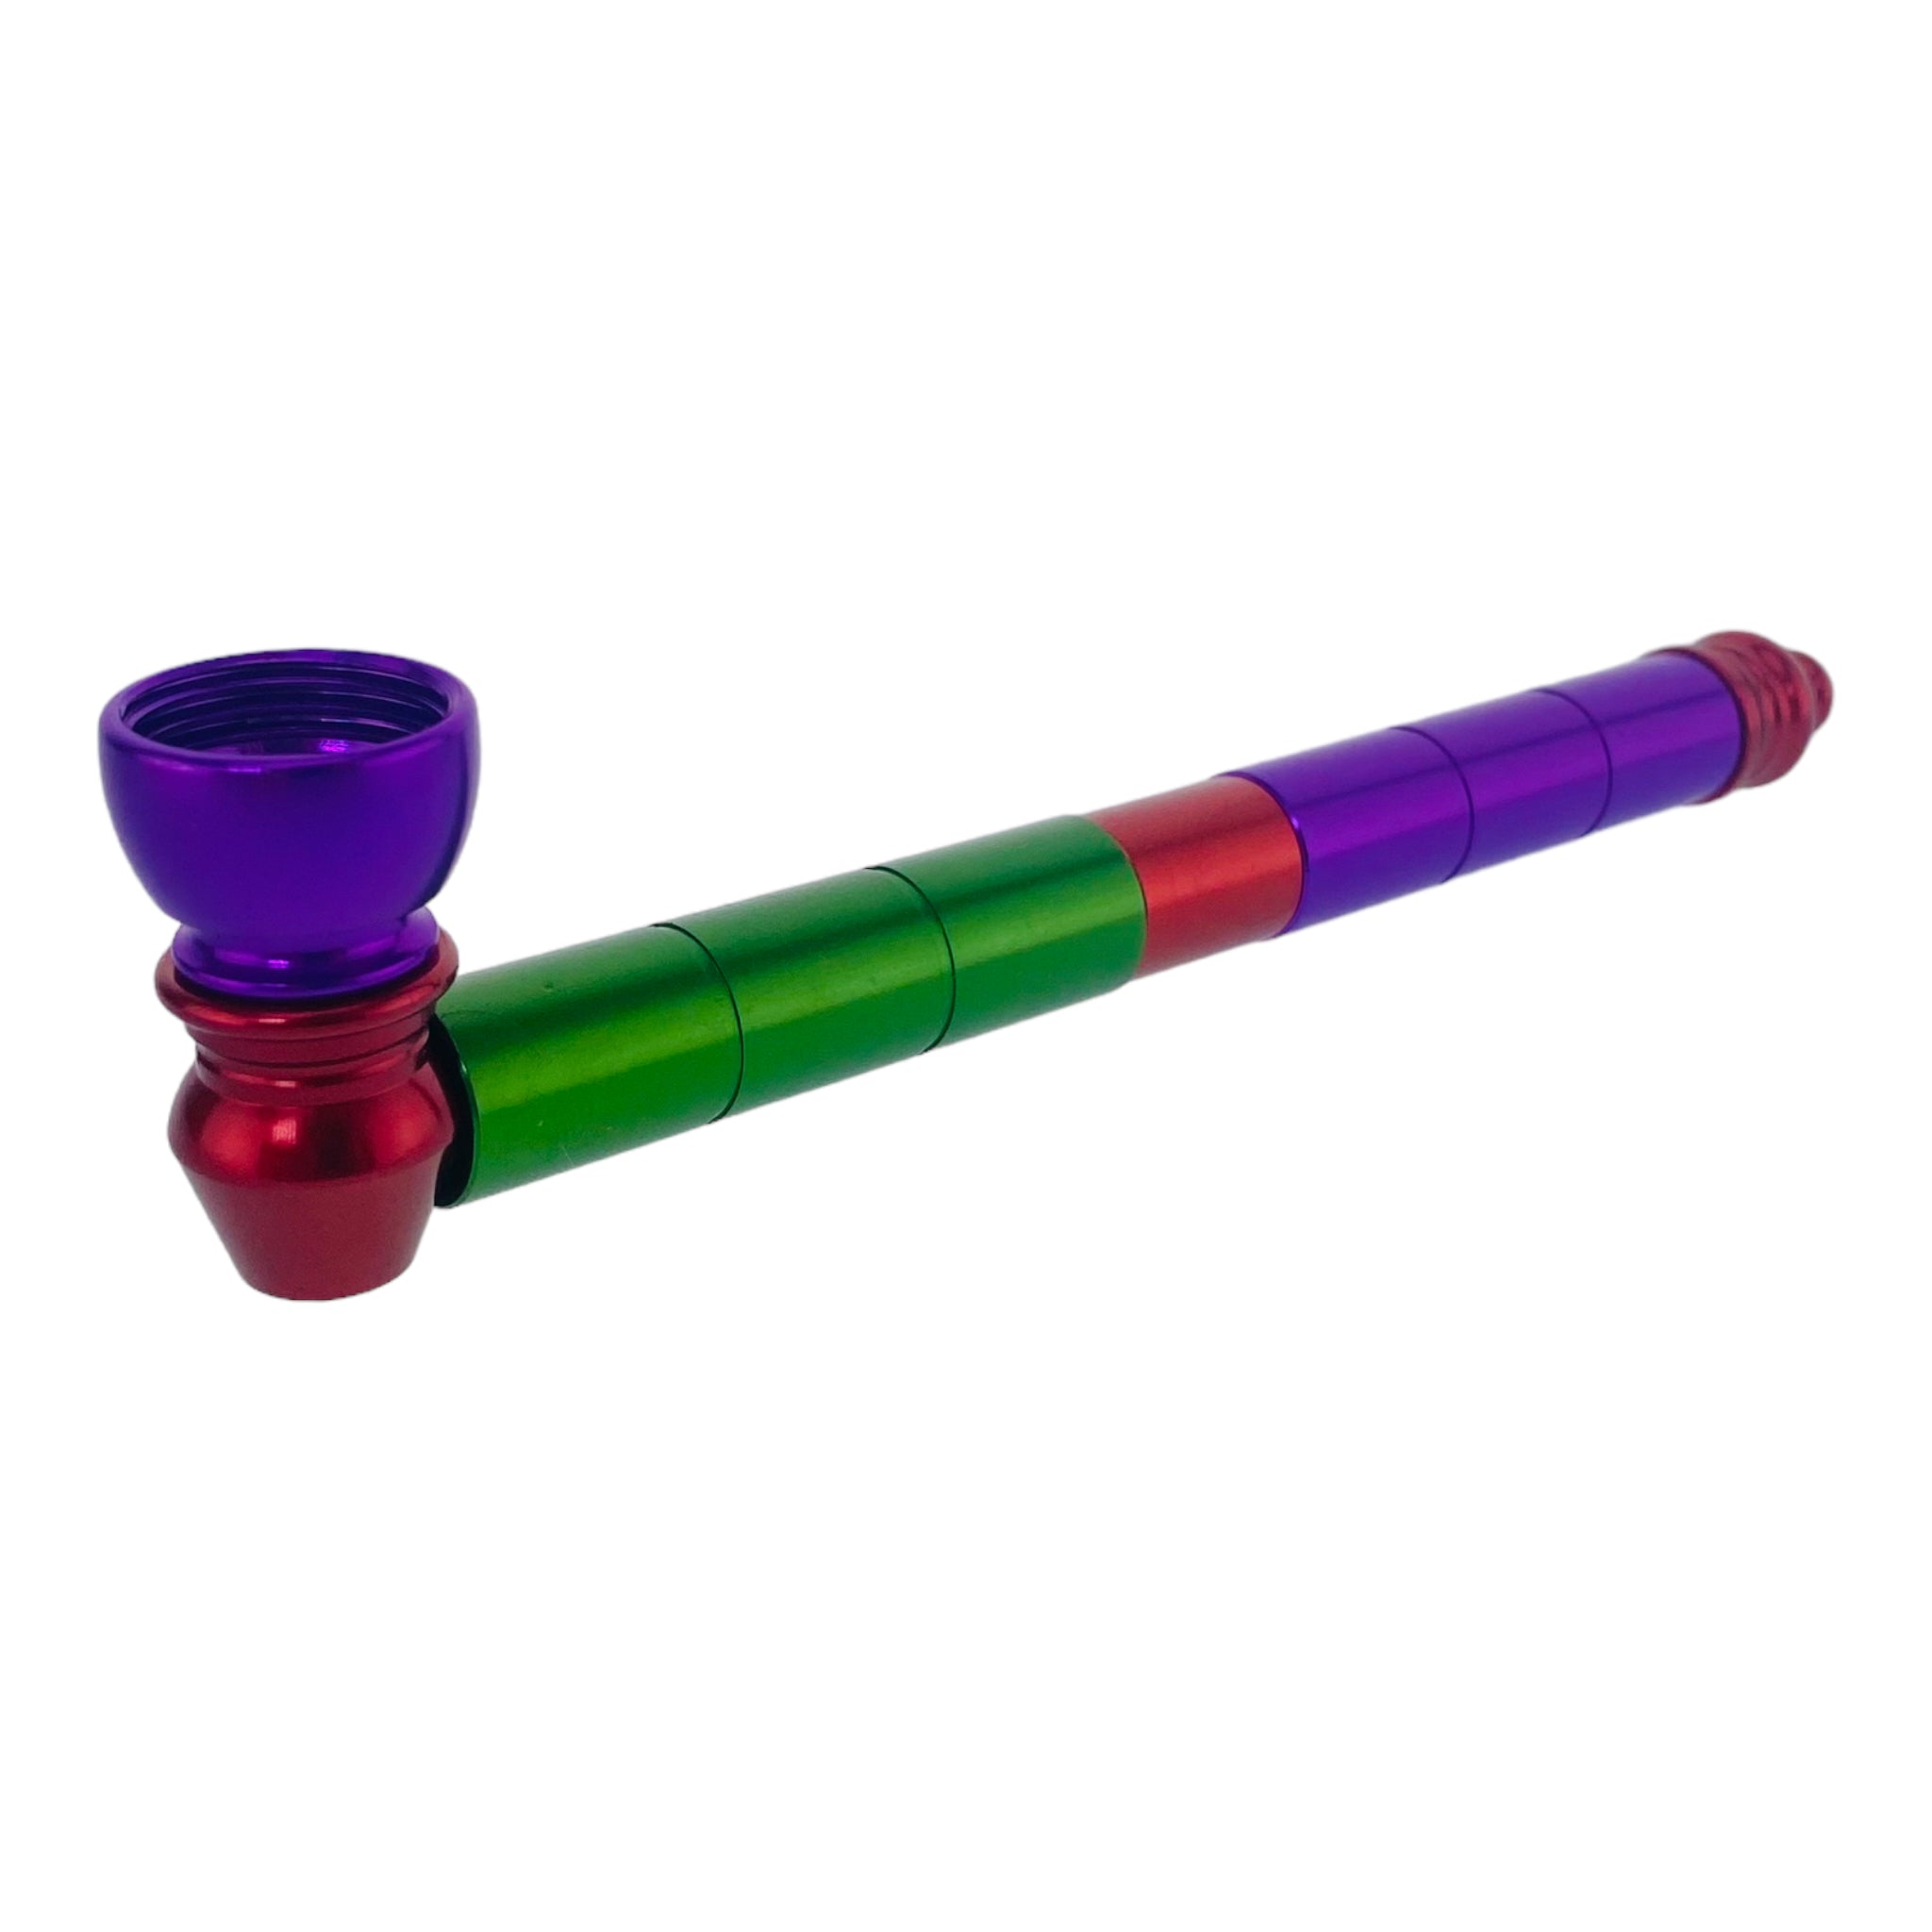 red purple and green Metal Hand Pipes - Multi-color Long Stem Aluminum Metal Pipe